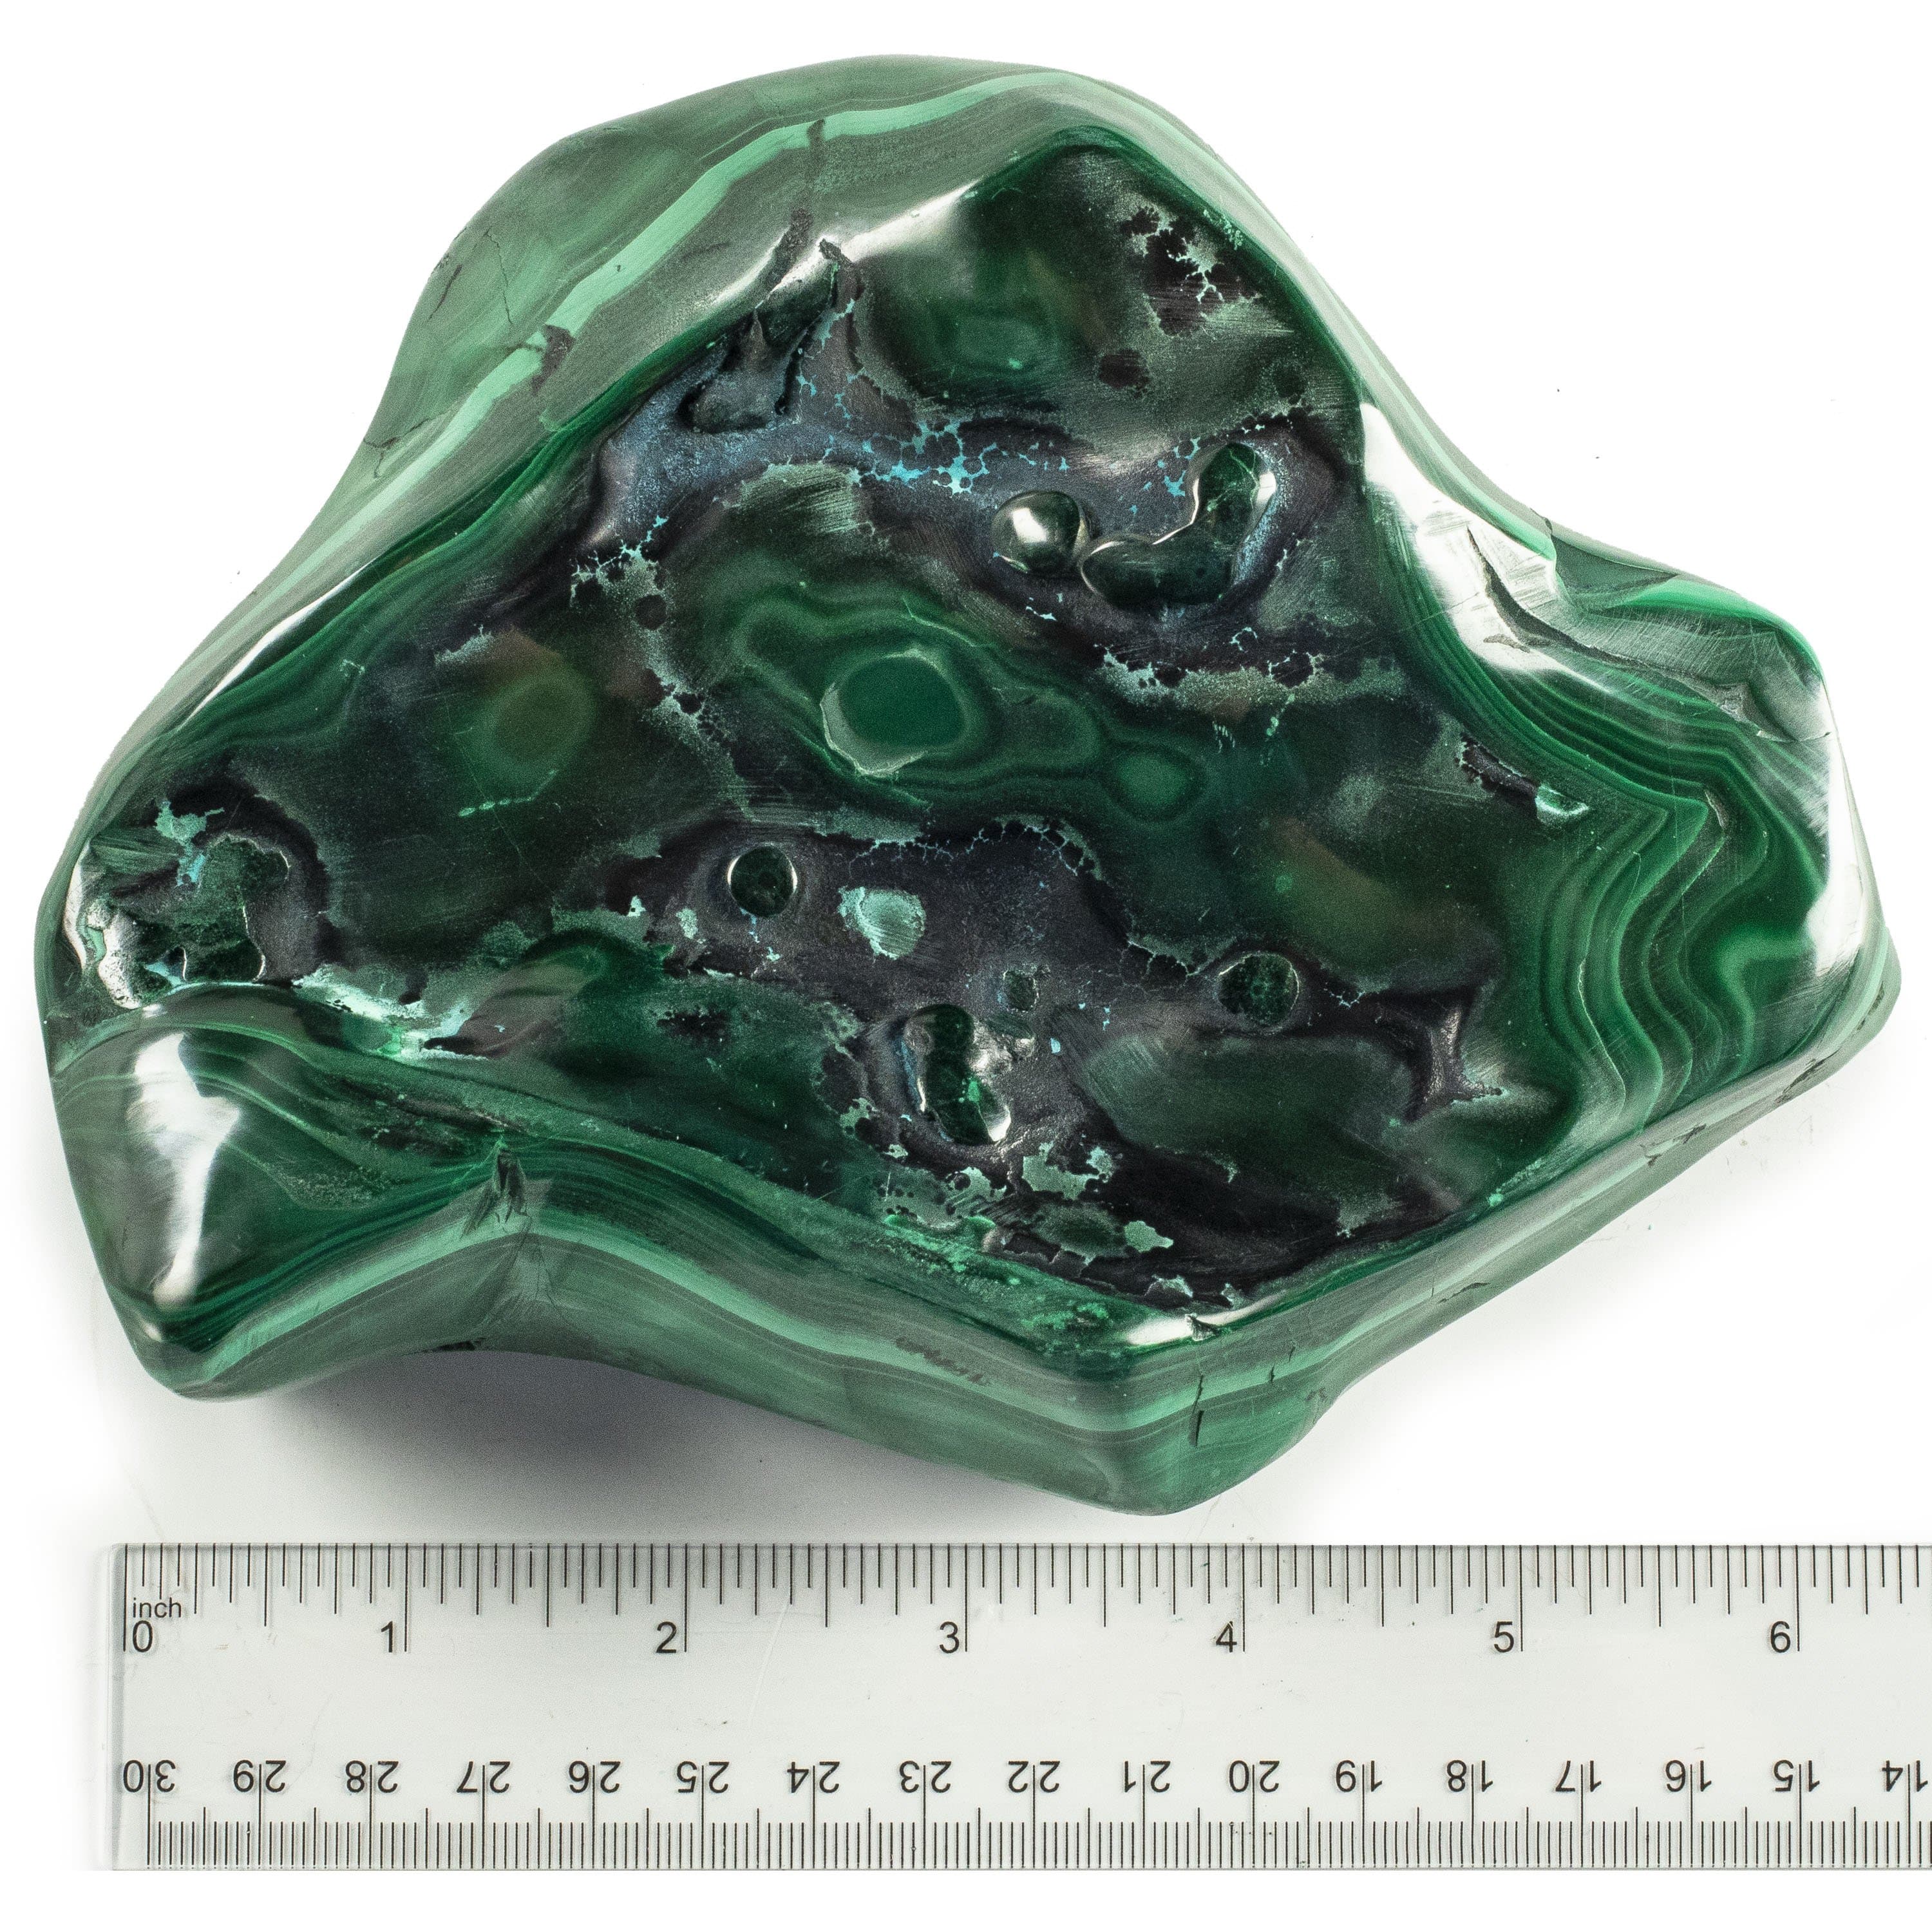 Kalifano Malachite Rare Natural Green Malachite with Blue Chrysocolla Freeform Specimen from Congo - 1.6 kg / 3.5 lbs MAC1100.006